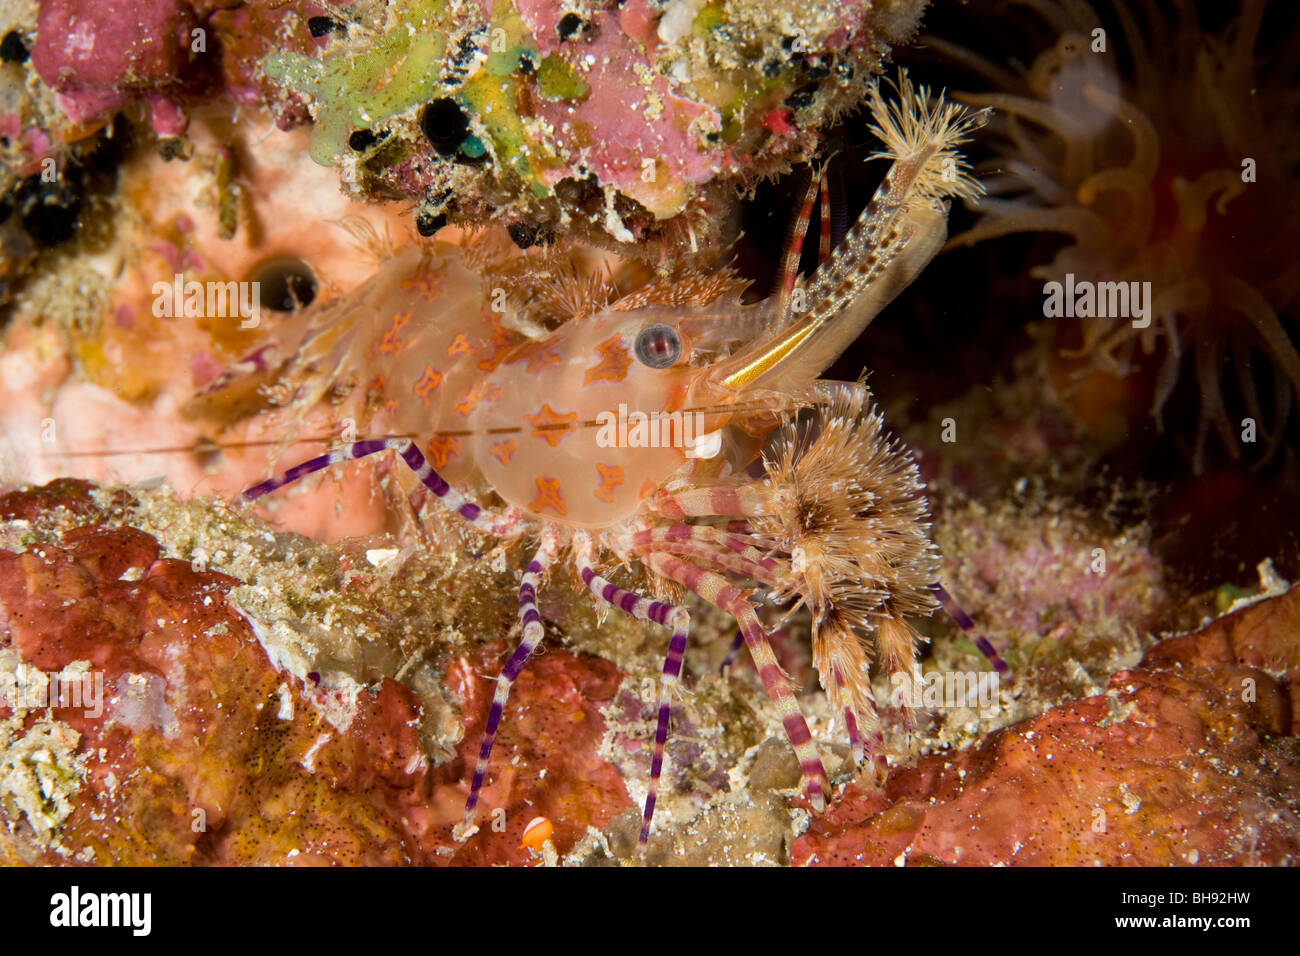 Marble Shrimp, Saron sp., Bunaken, Sulawesi, Indonesia Stock Photo